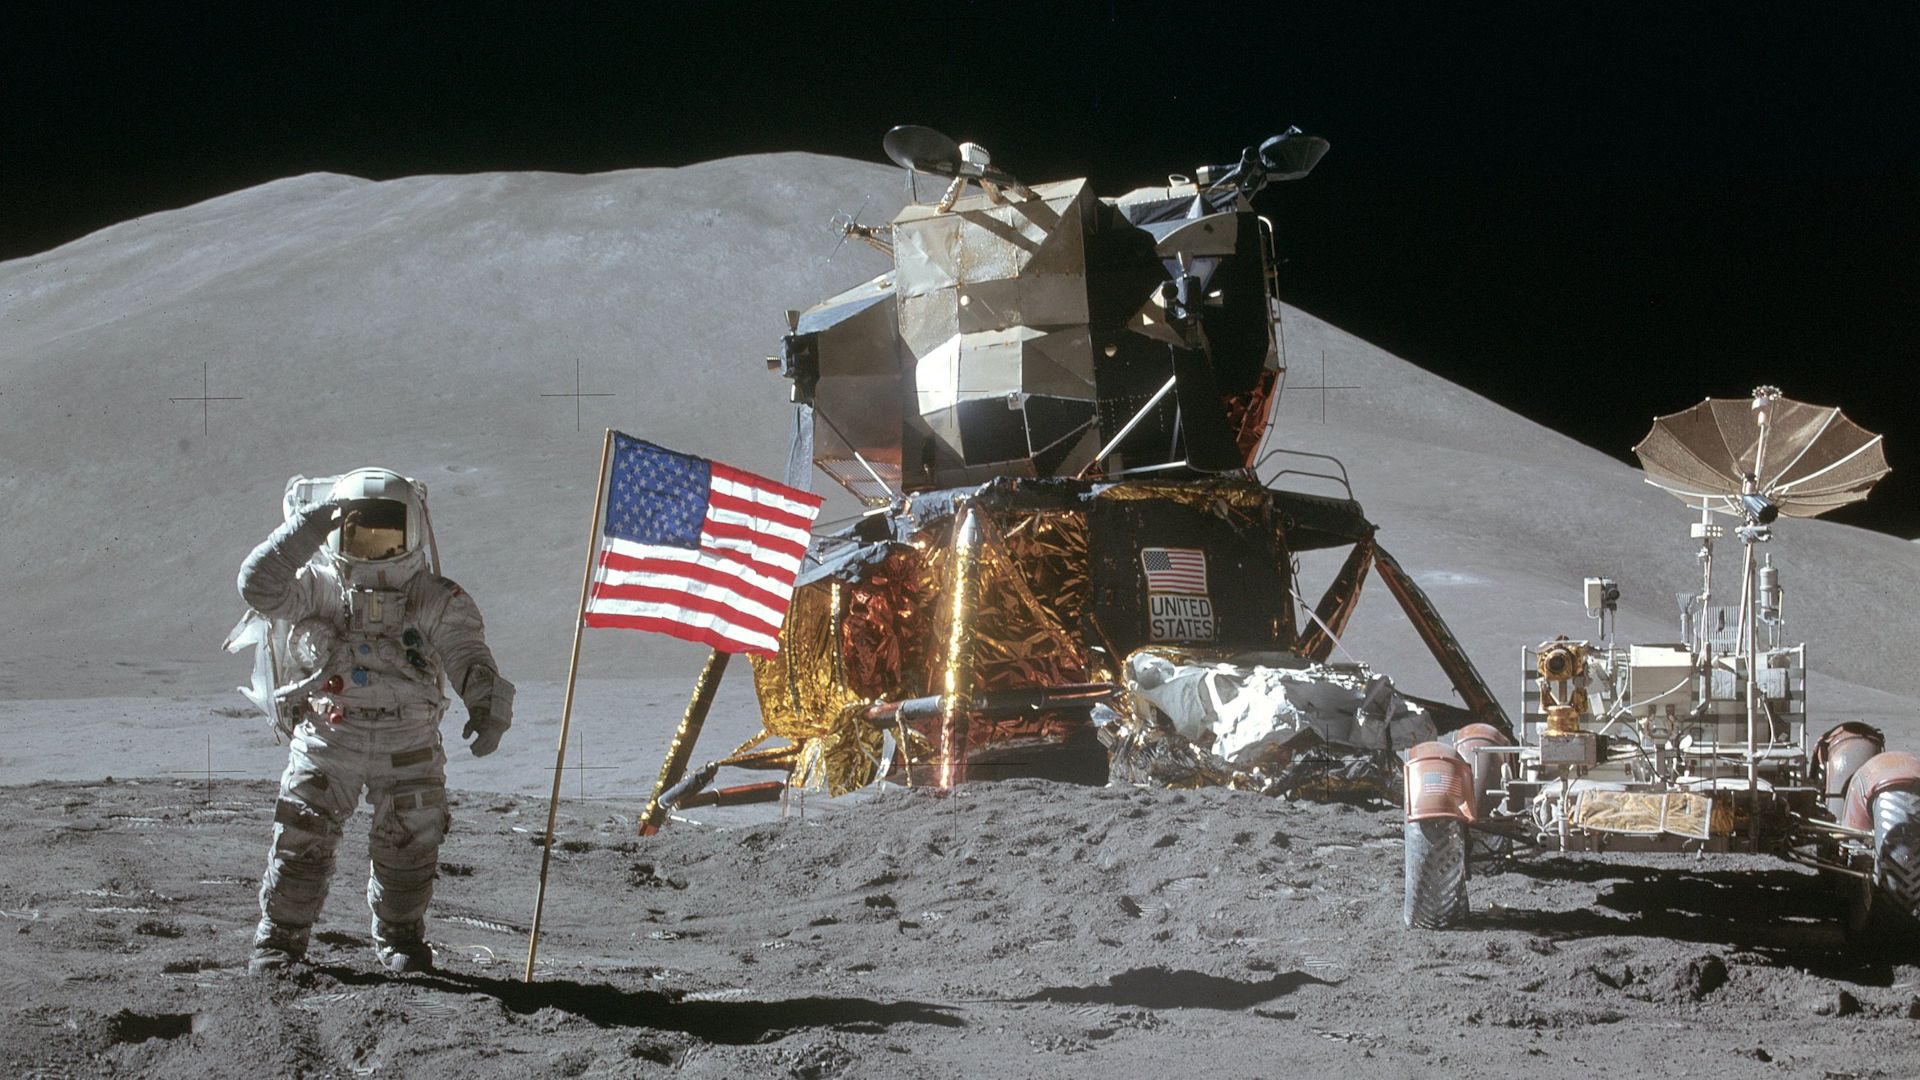 Первый выход человека на луну. Аполлон 11 высадка на луну. Запуск Аполлон 11. Аполло-14 астронавты на Луне.